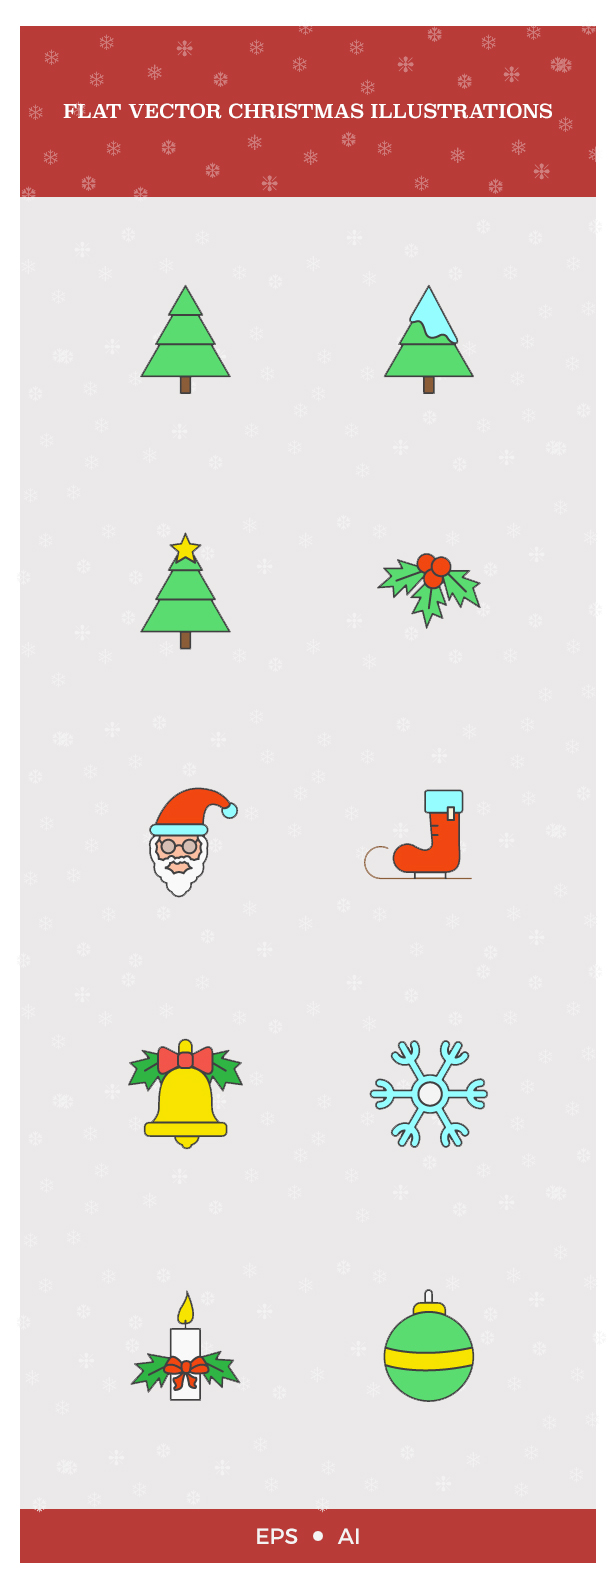 Free Vector Christmas Icons